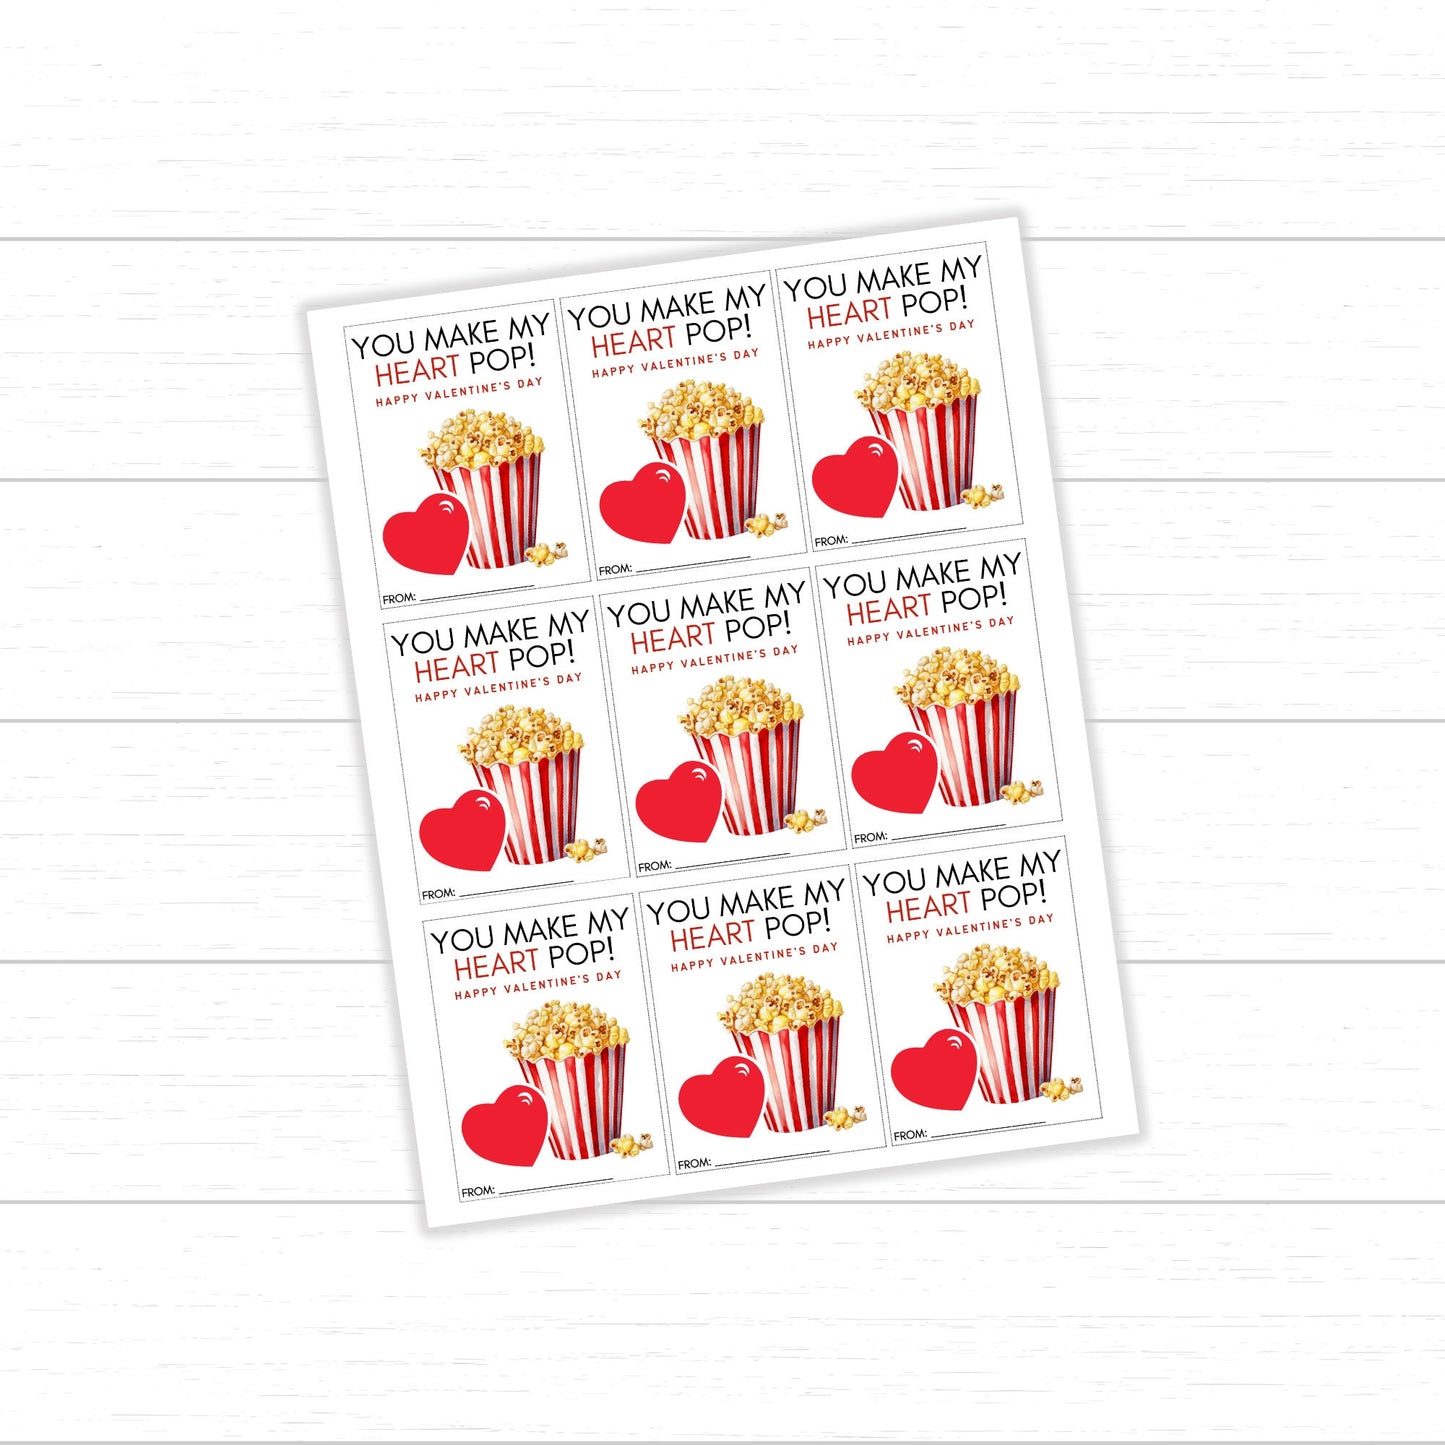 Popcorn Valentine's Day Cards, You Make My Heart Pop Valentine Cards, Printable Valentine's Day Cards, Printable Popcorn Valentines